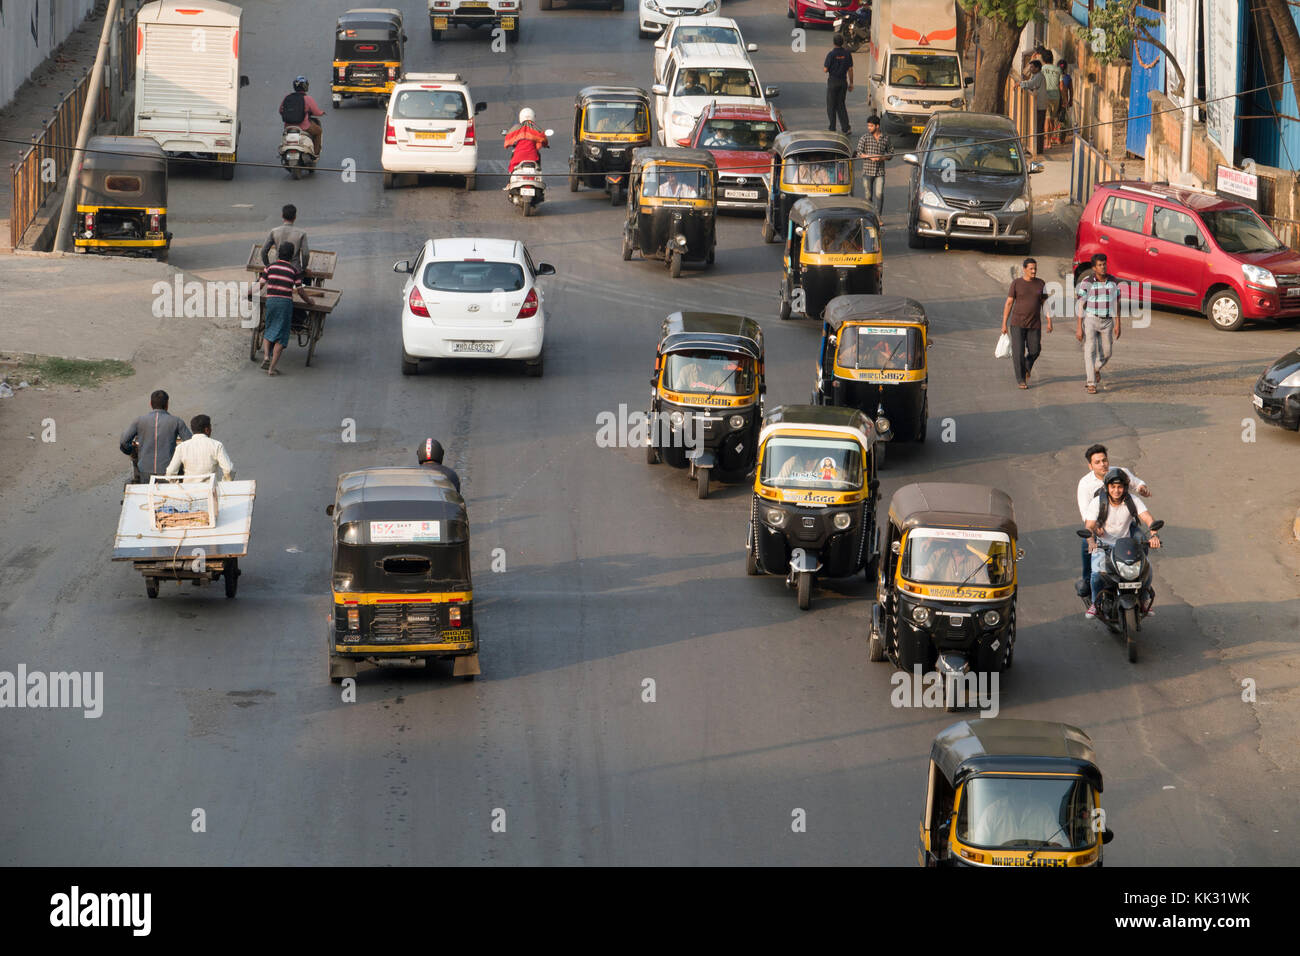 High angle view of auto rickshaws (tuk tuks) and other traffic in Versova, Mumbai, India Stock Photo